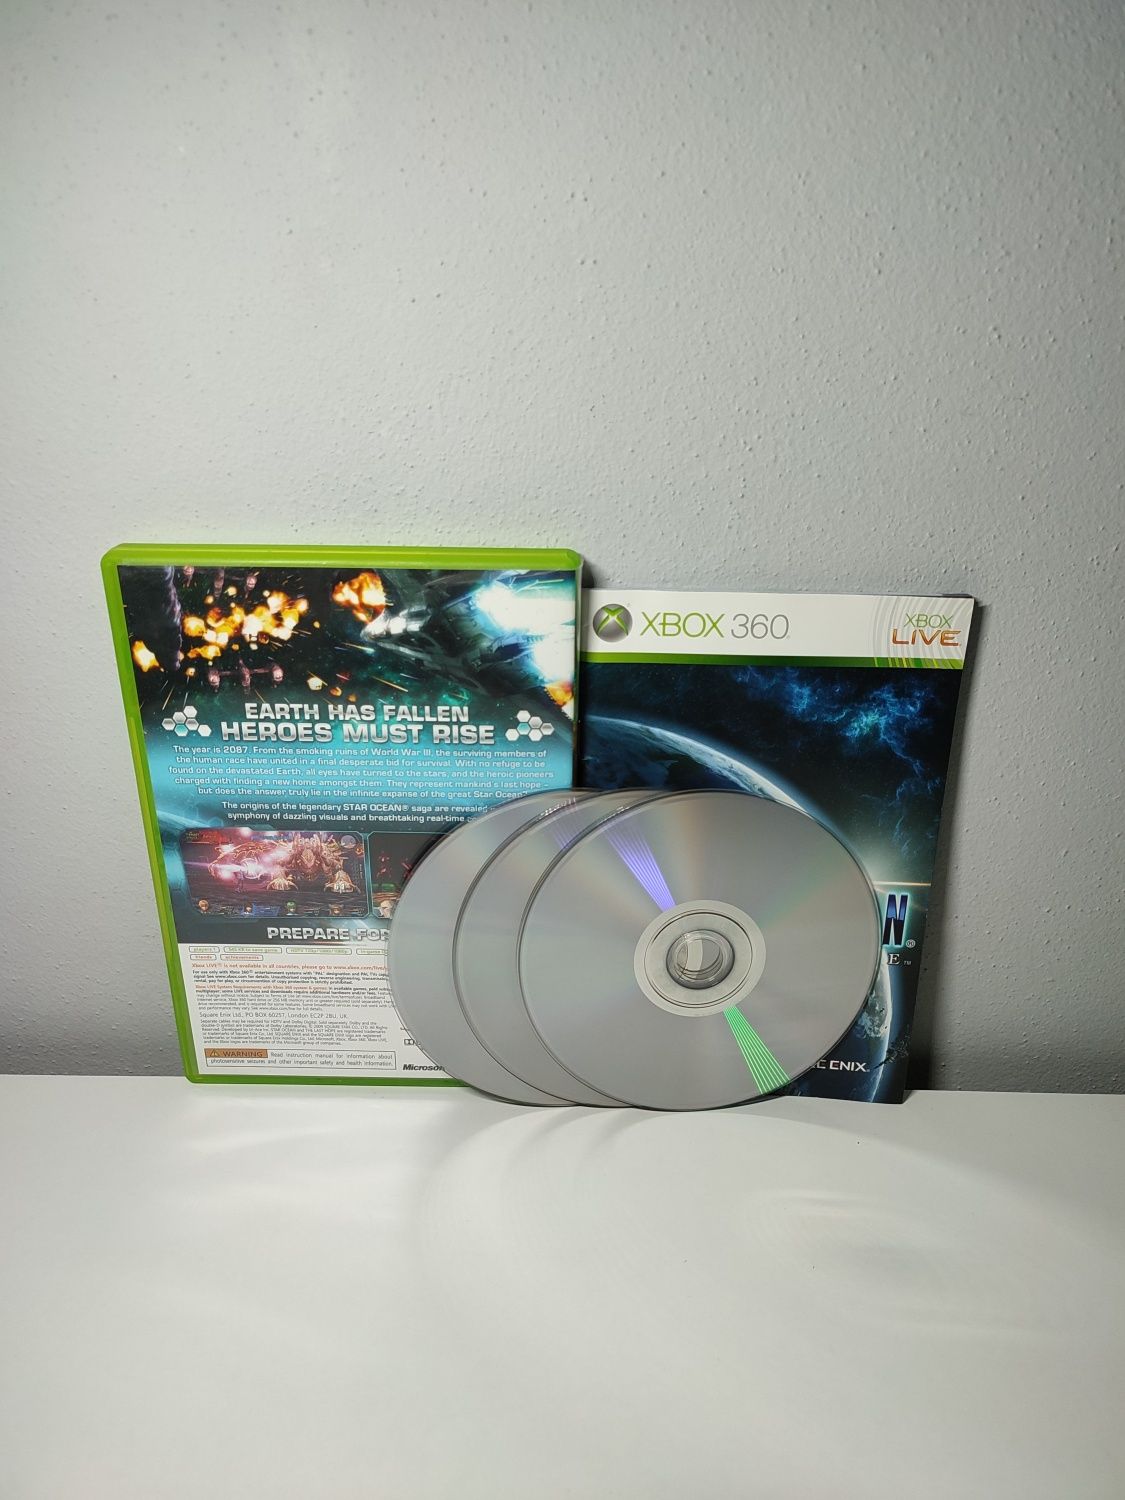 Star Ocean: The Last Hope (Jak nowa, Unikat) - Gra Xbox 360